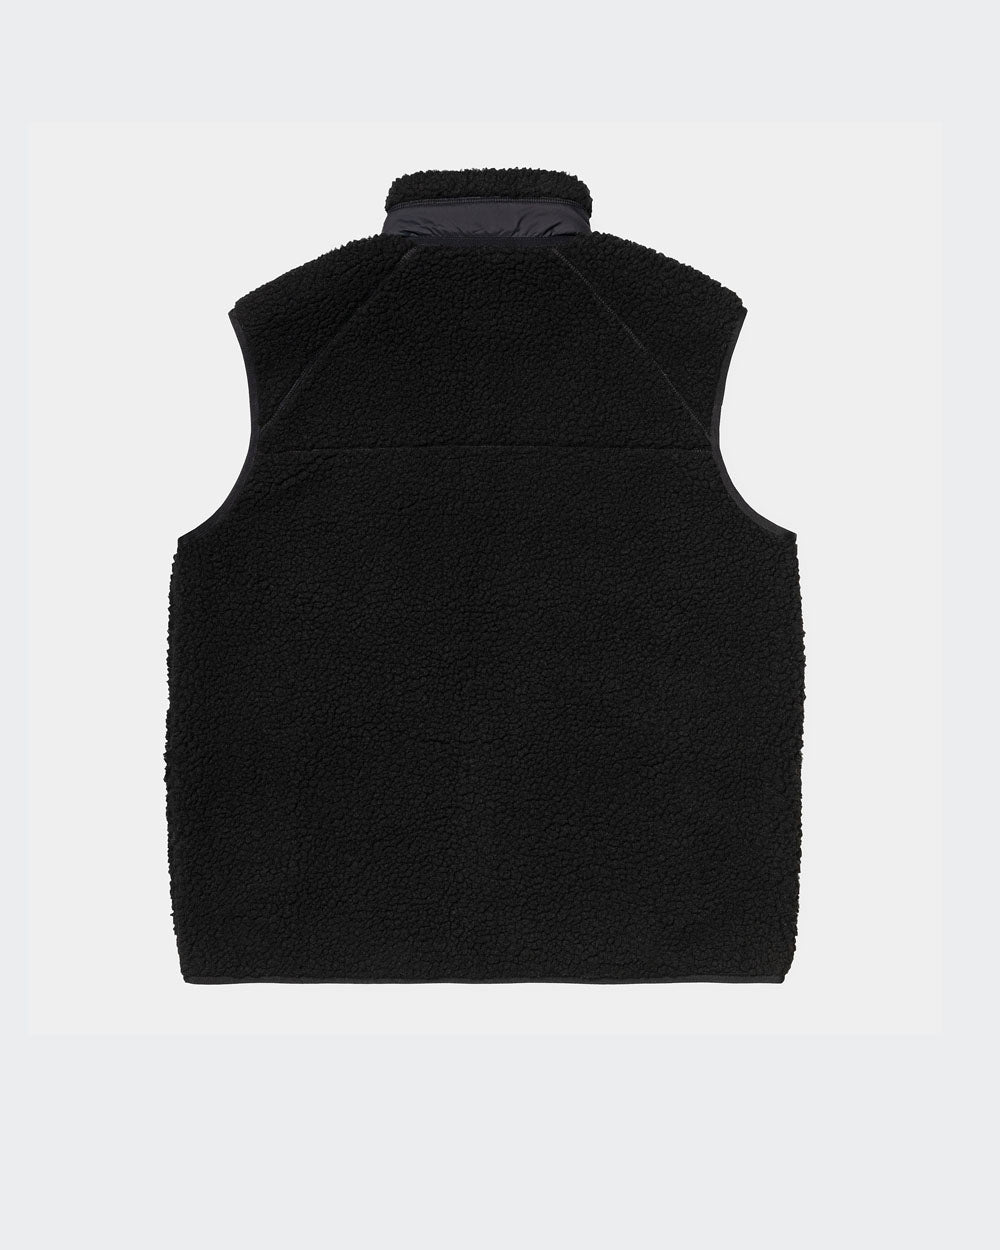 Prentis Vest Liner Black Black